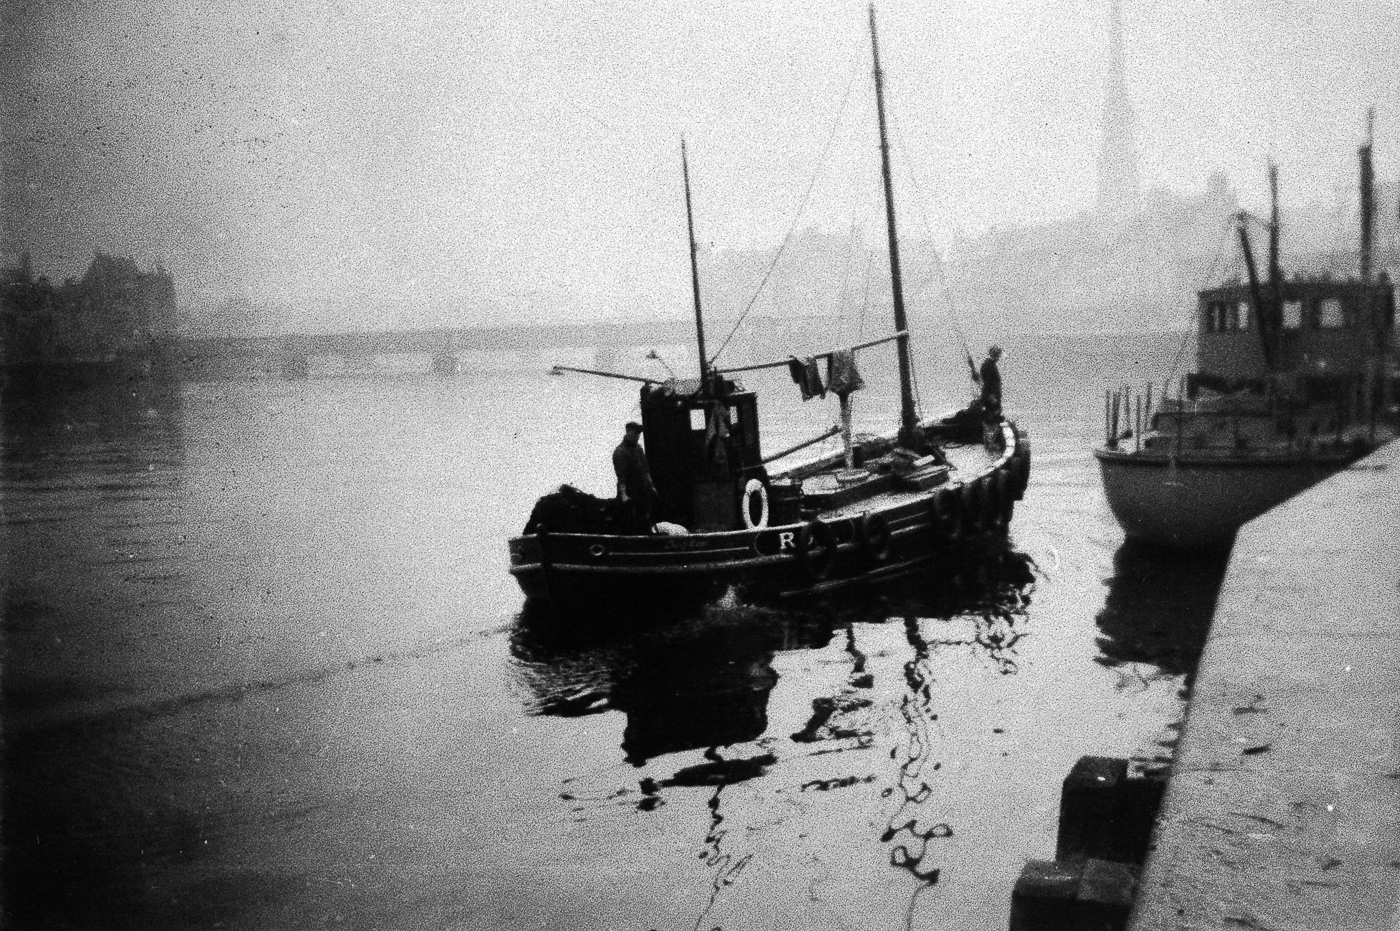 'Dewy Rose', RO5, arriving at Ayr harbour, 1952.